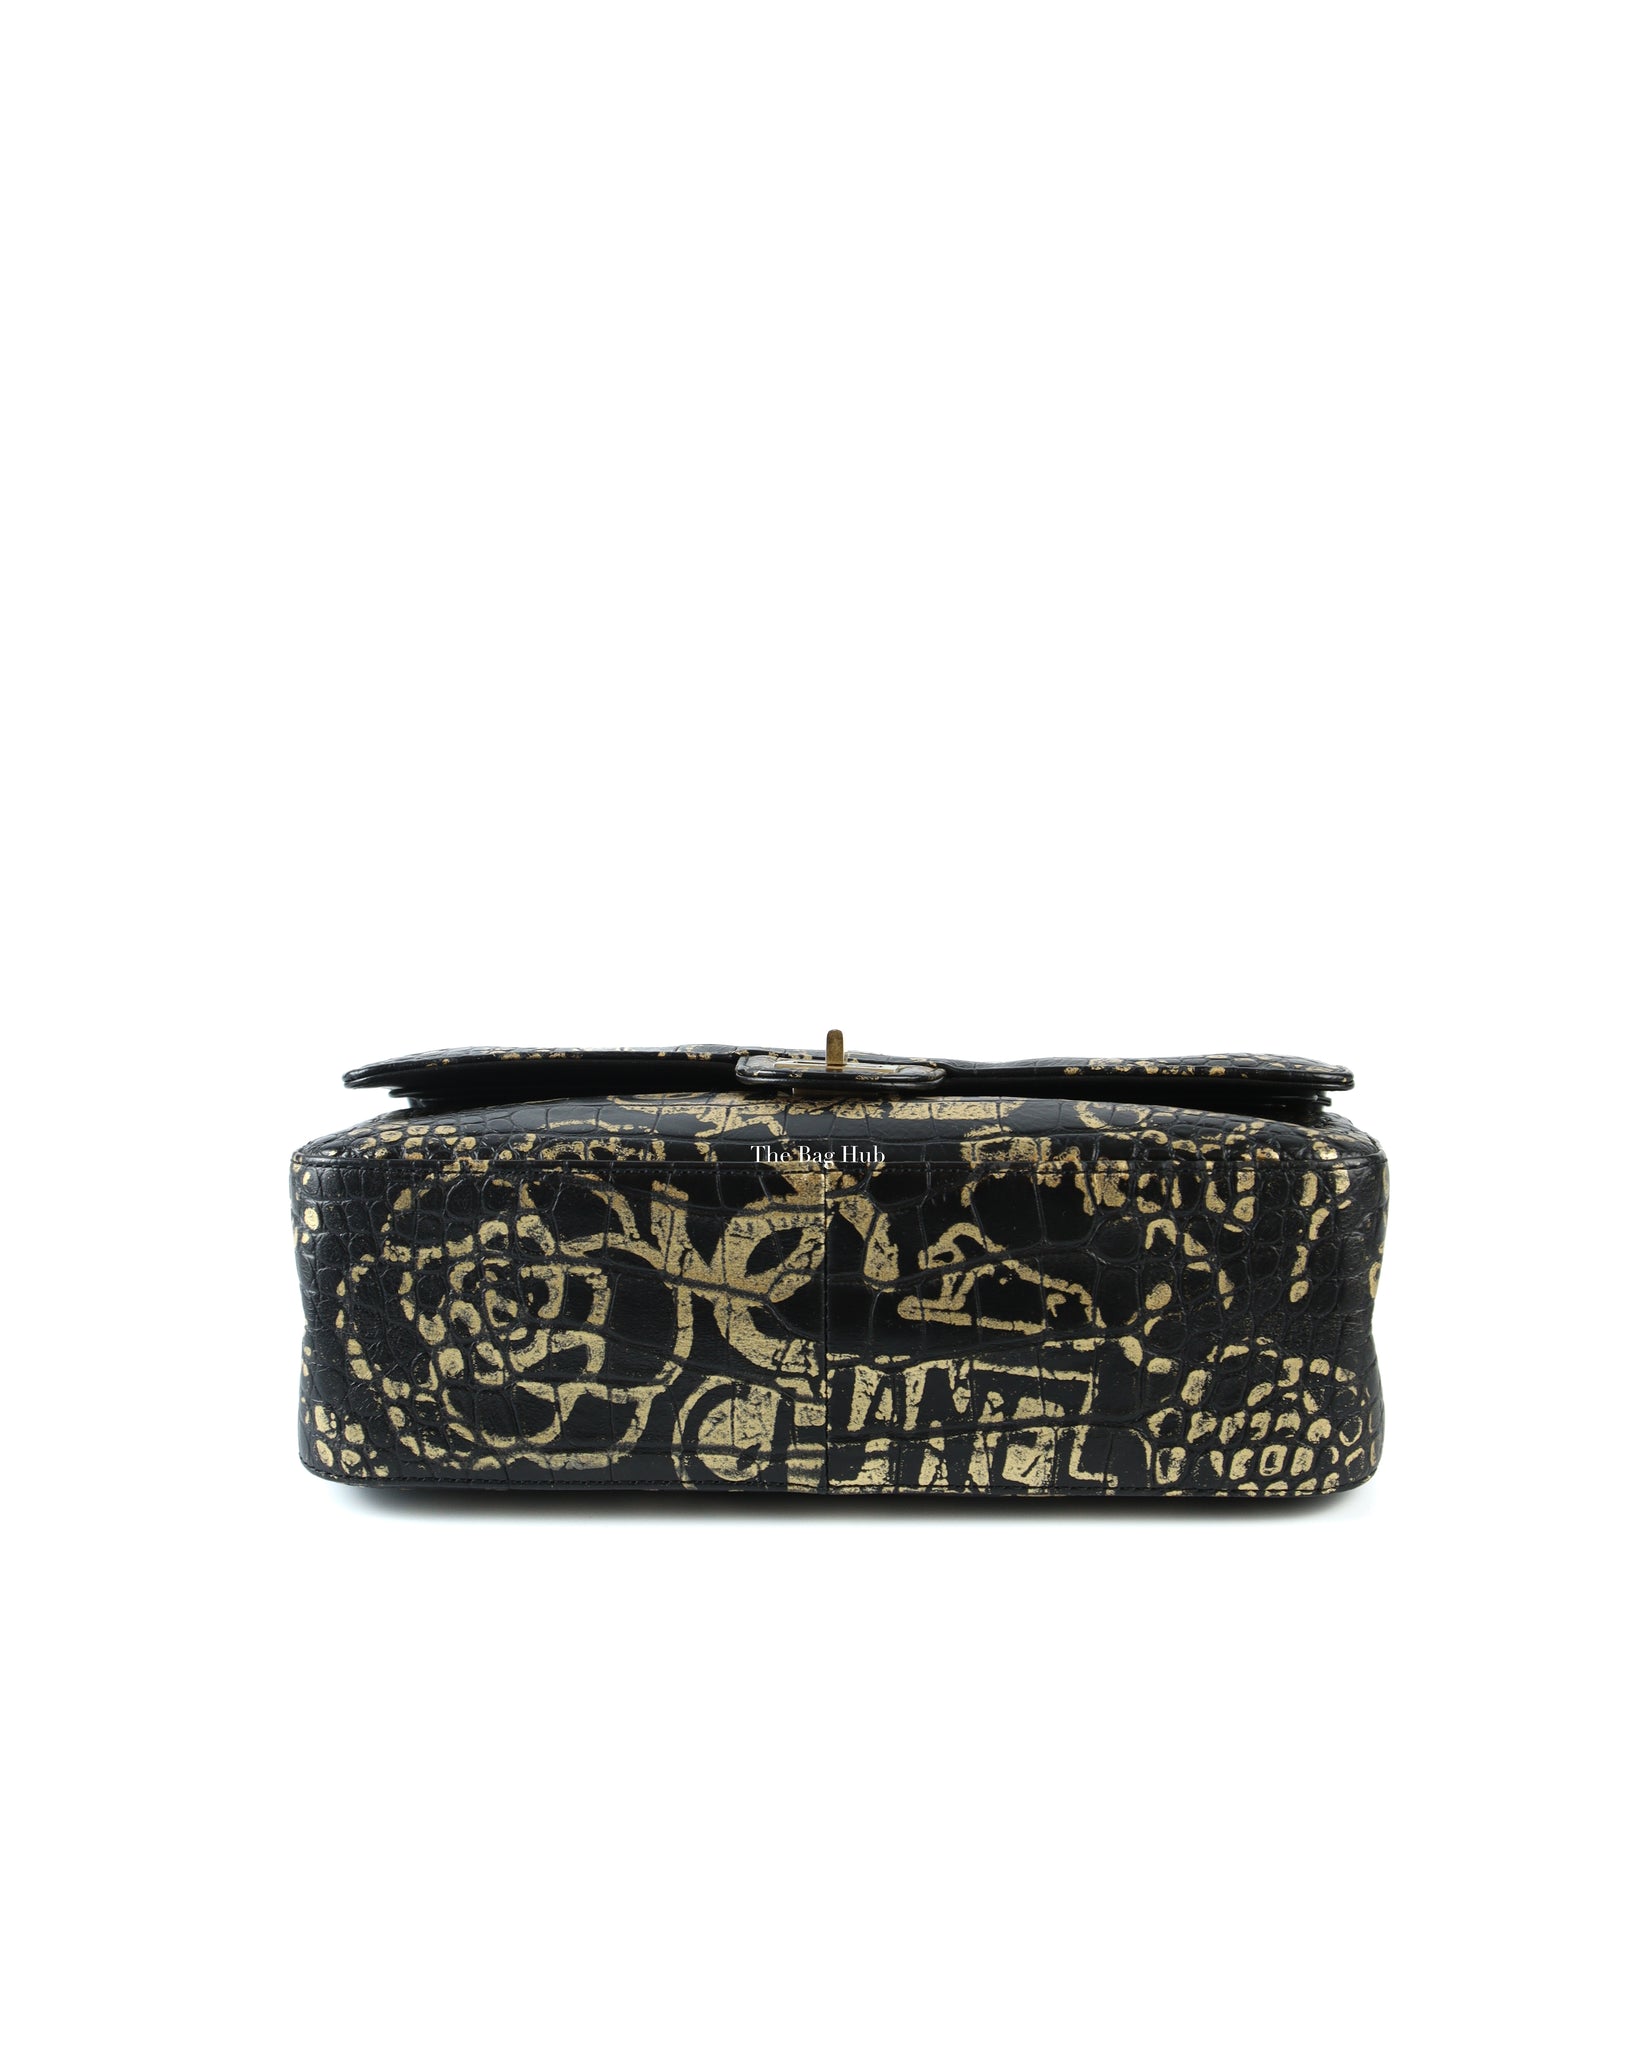 Chanel Black/Gold Graffiti Crocodile Embossed Reissue 2.55 226 Flap Bag-6